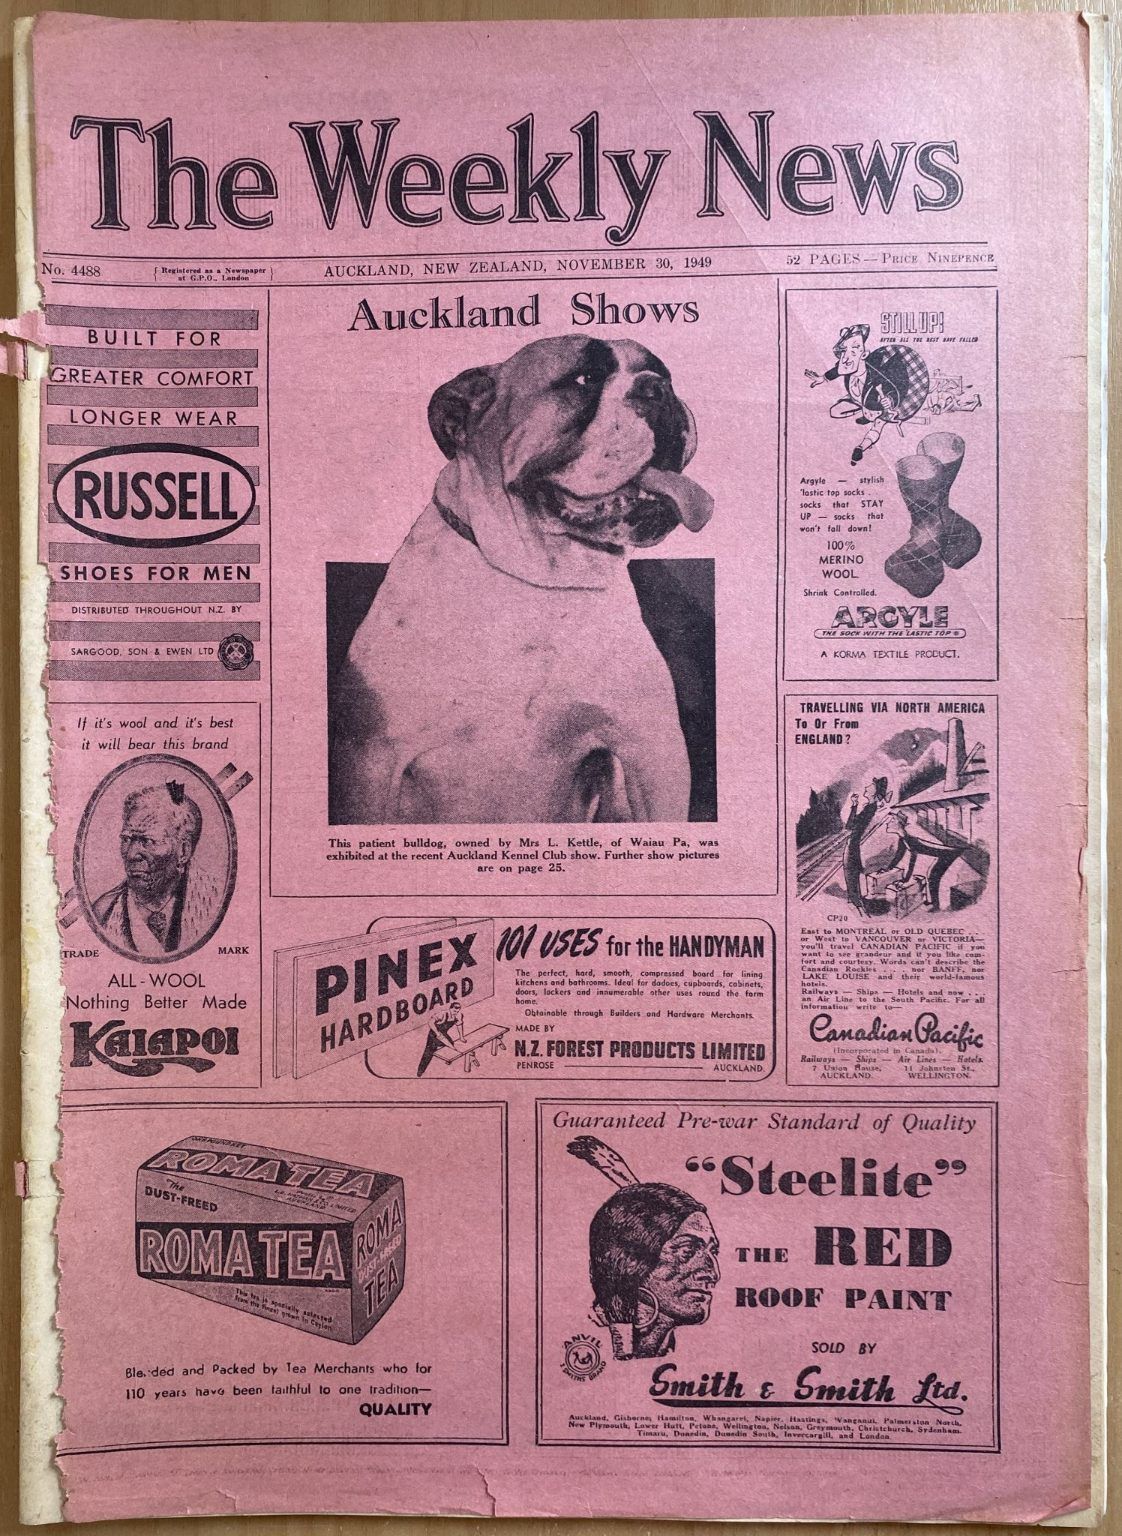 OLD NEWSPAPER: The Weekly News, No. 4488, 30 November 1949